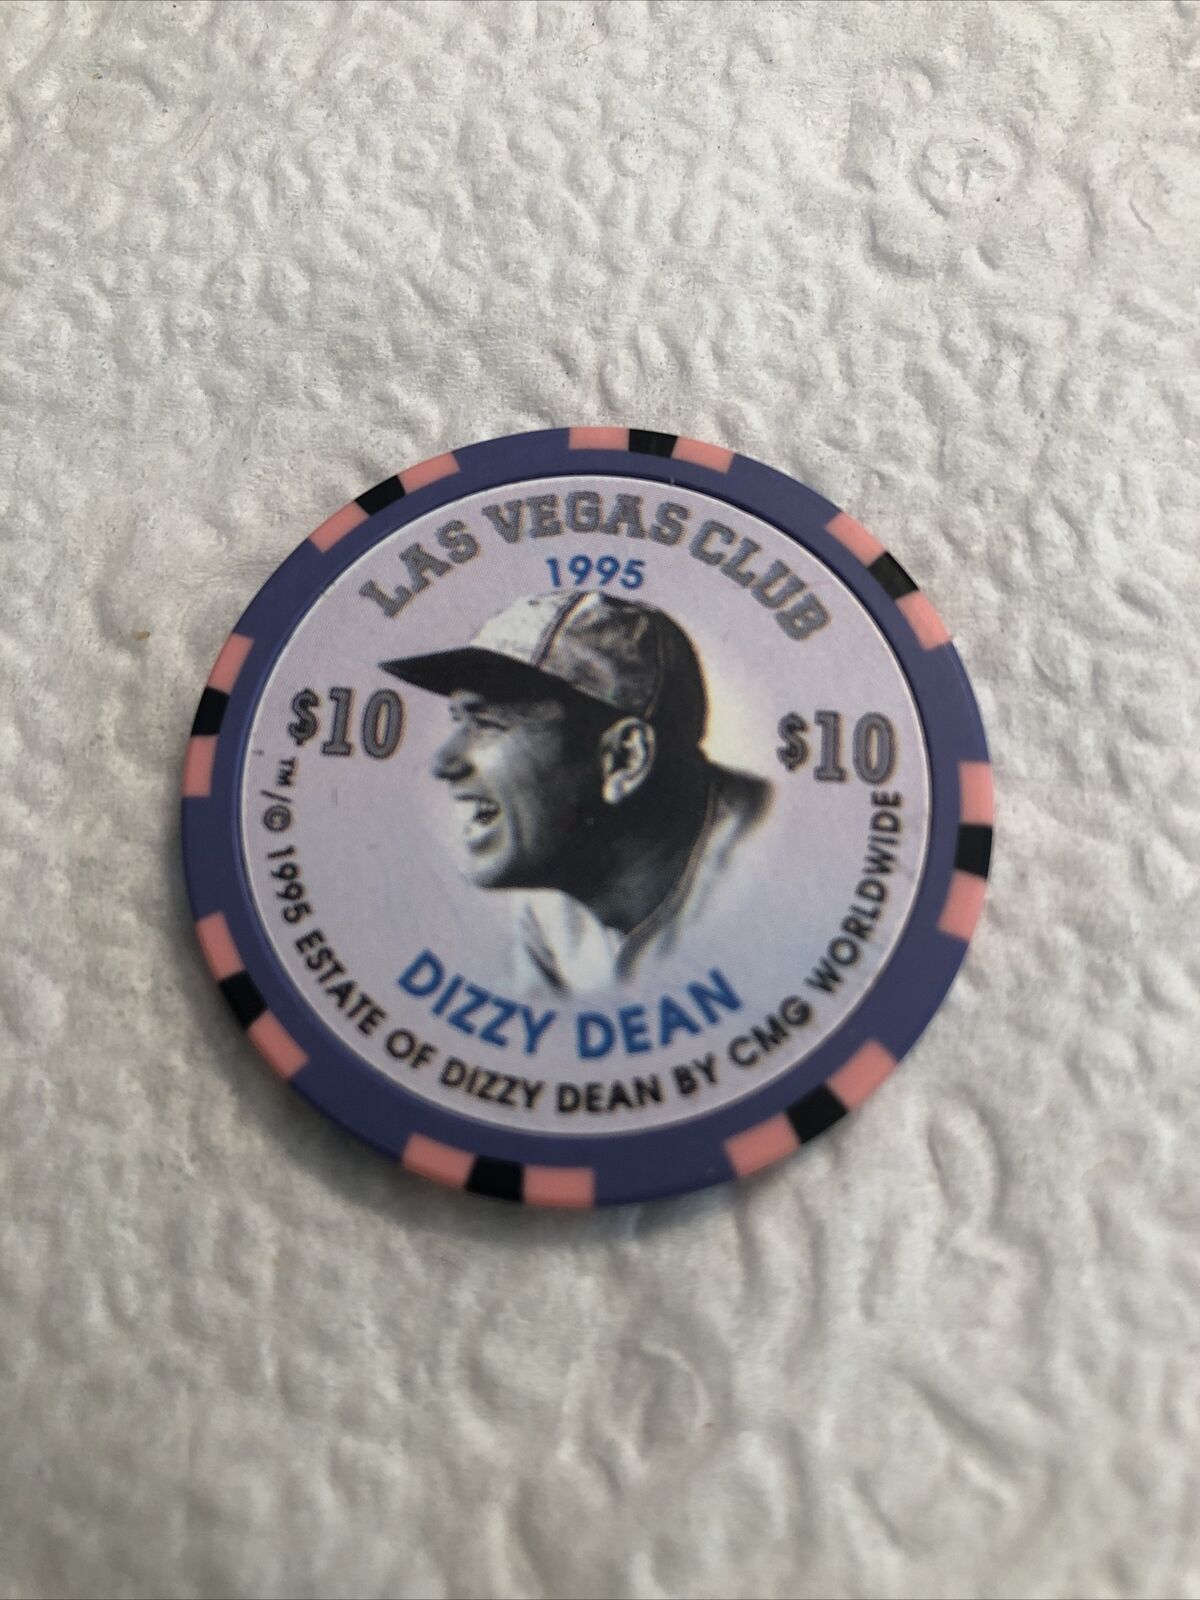 $10 Las Vegas Club Dizzy Dean Casino Chip